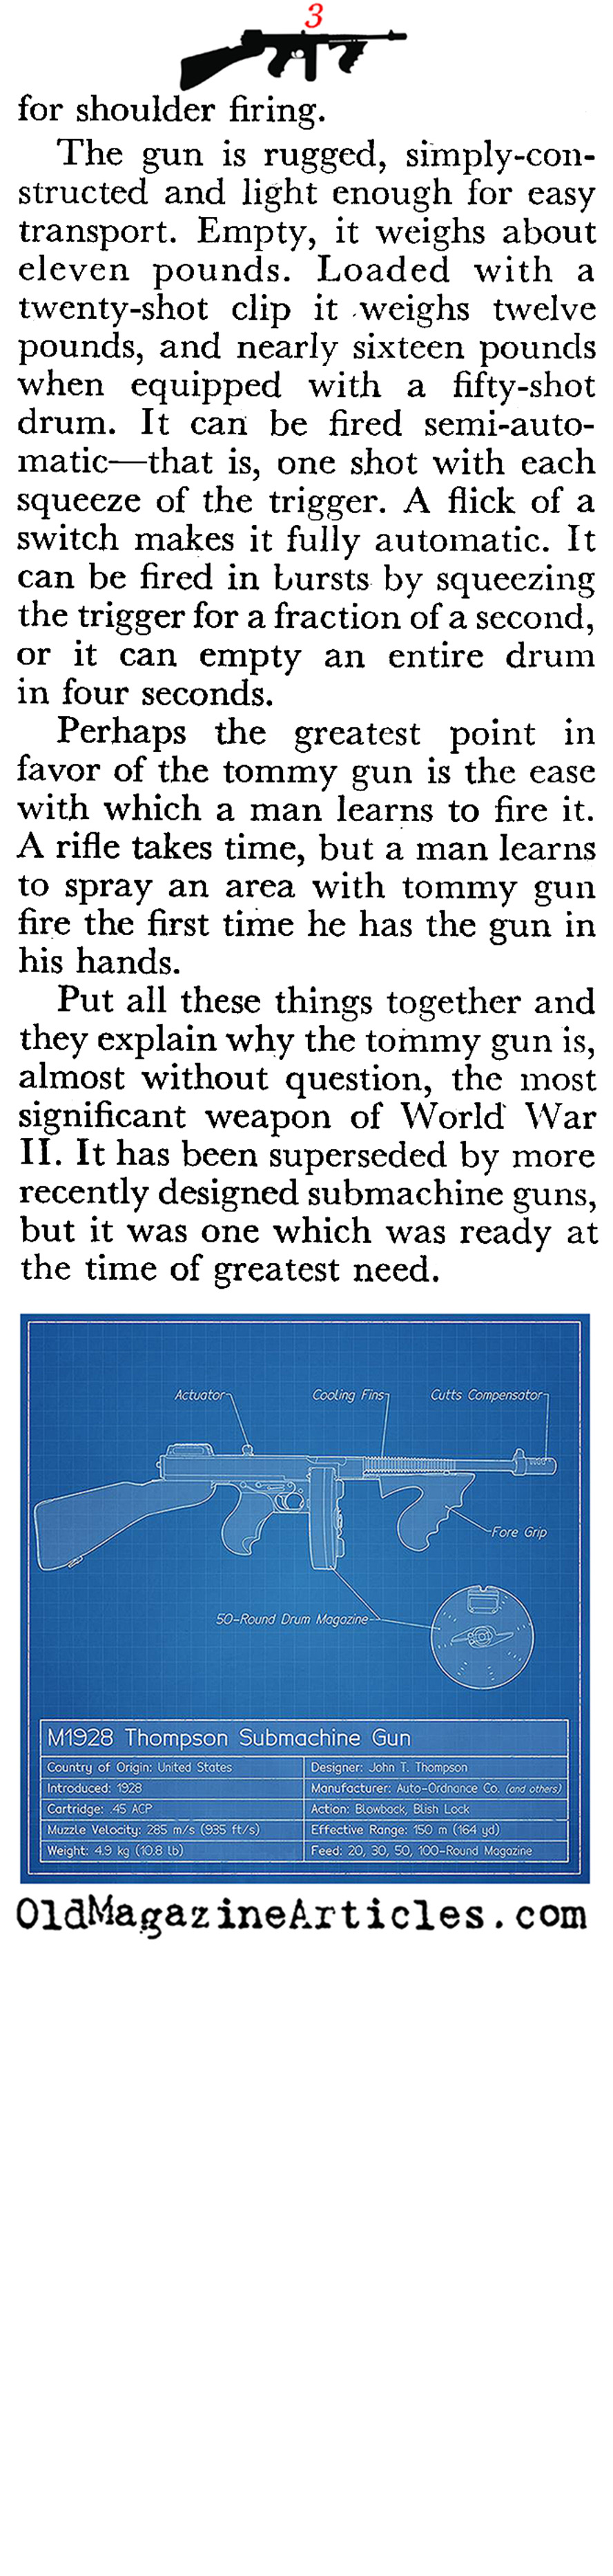 Tommy Gun (Coronet Magazine, 1945)